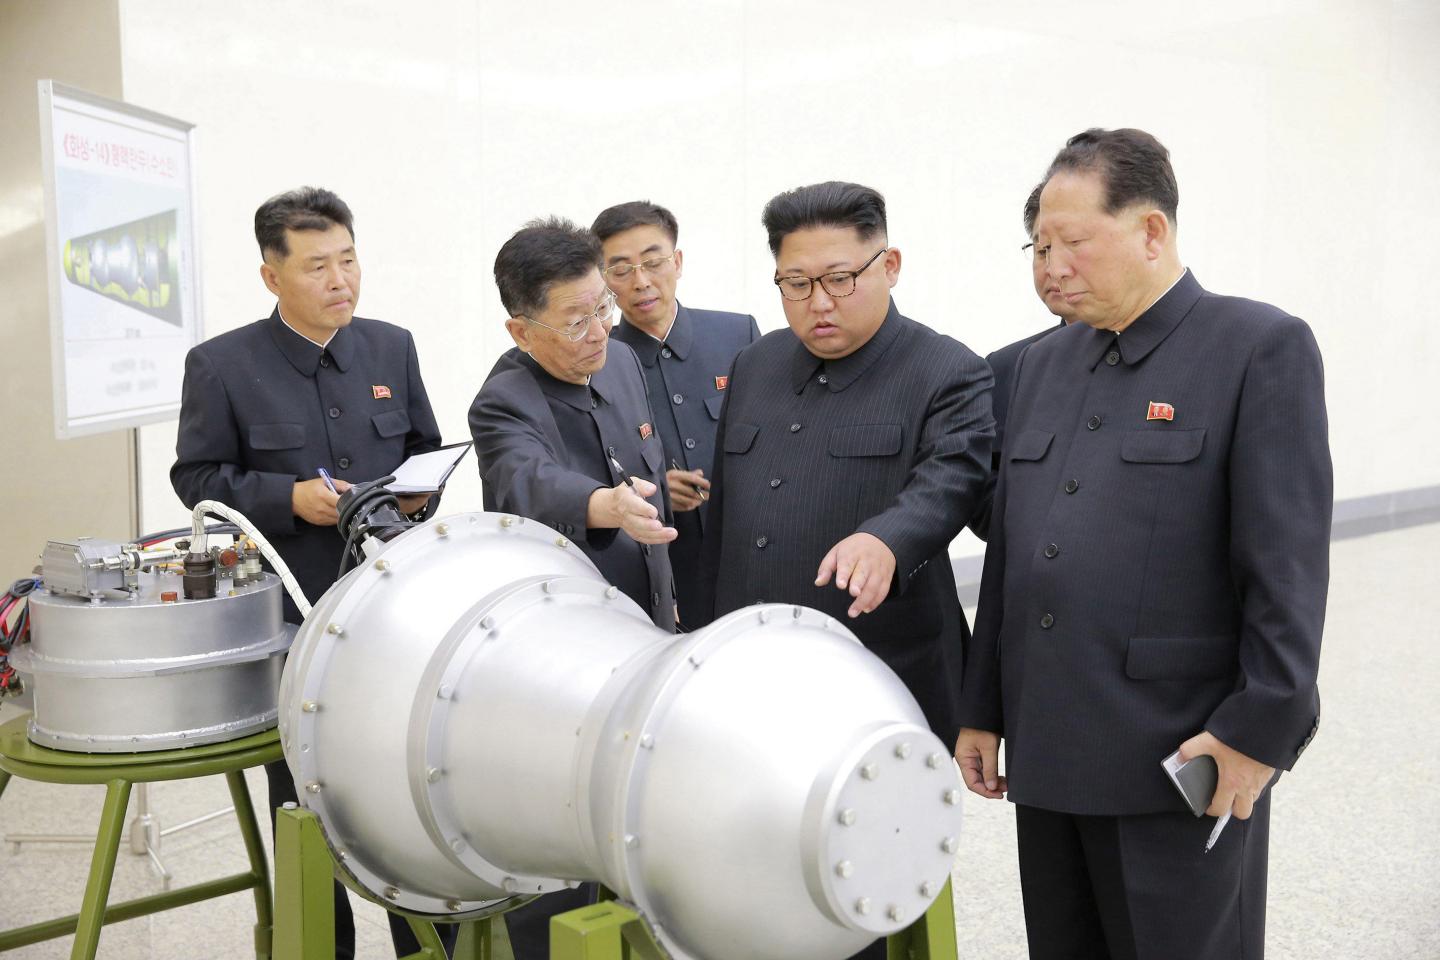 Kim Jong-un Inspects Nuclear Device in 2017